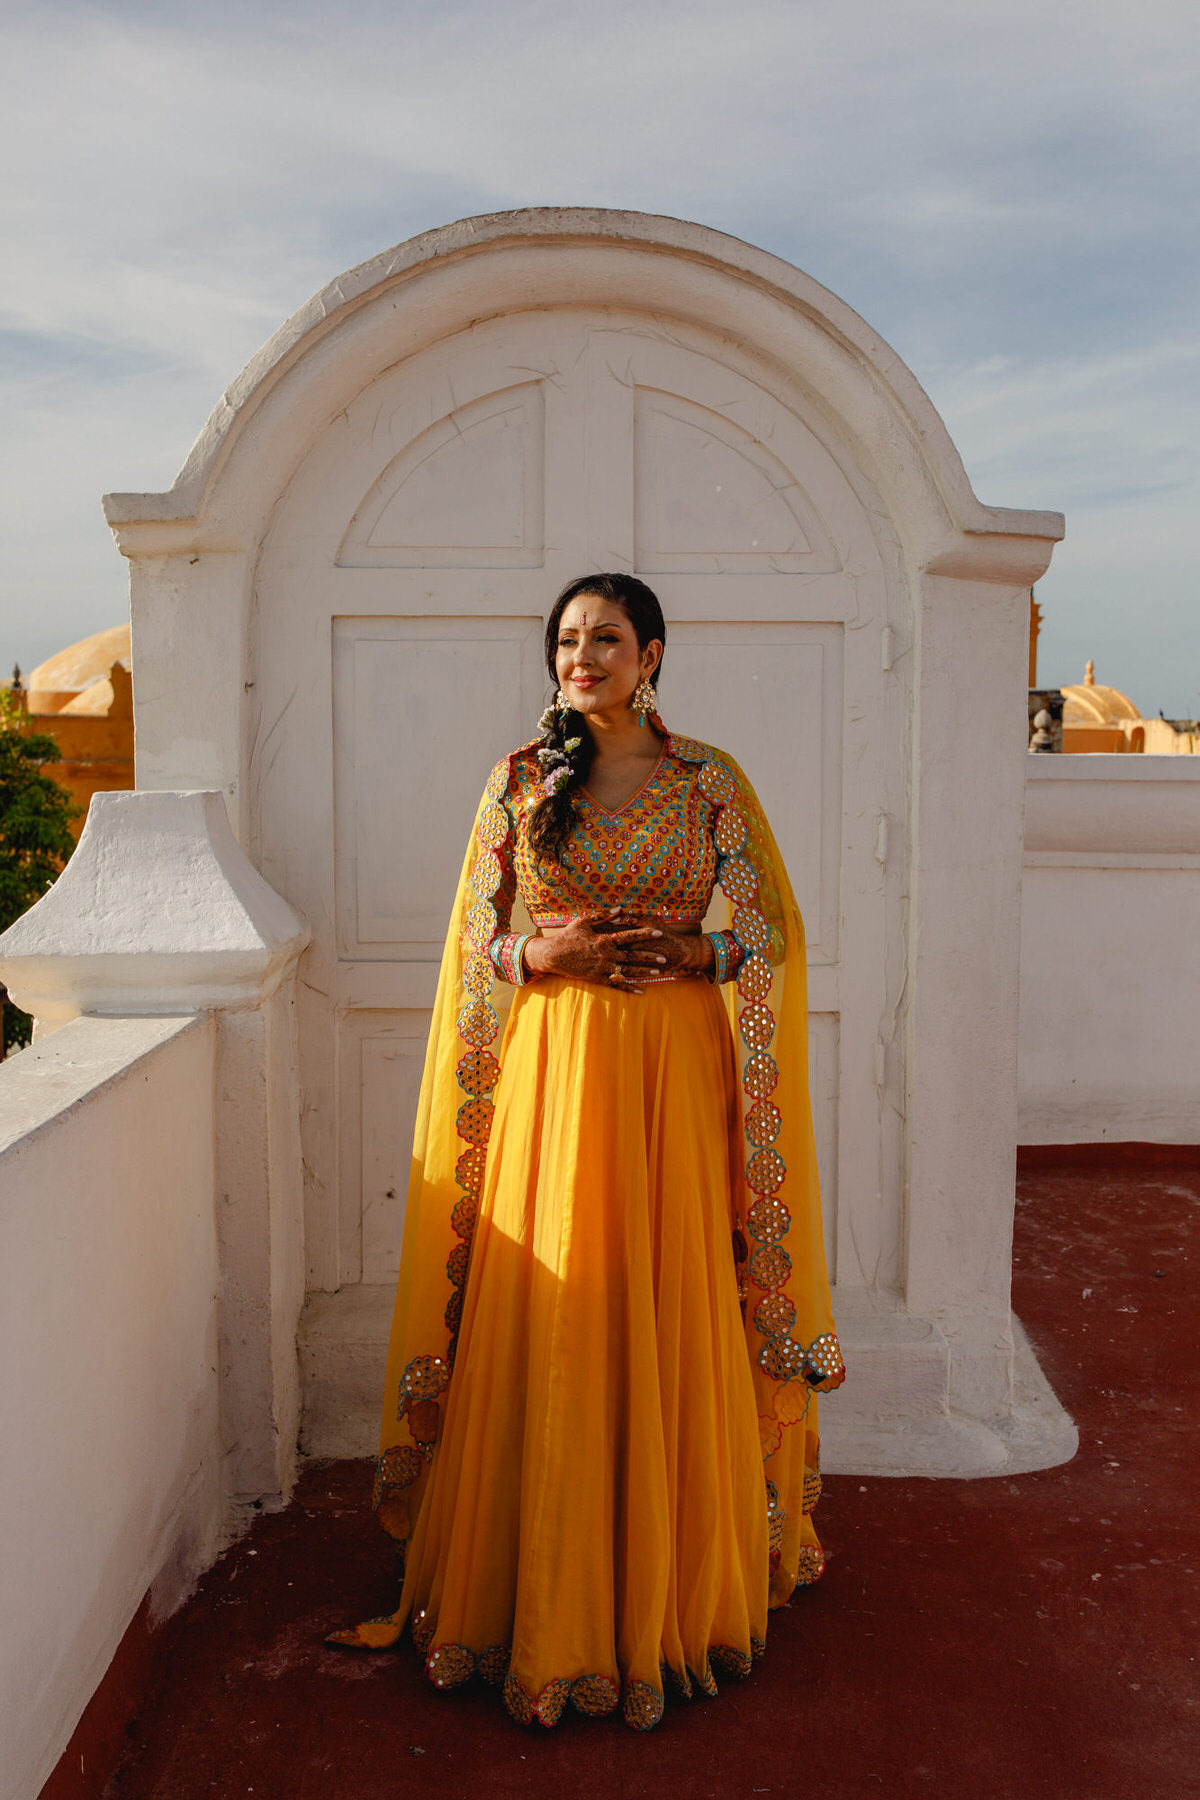 Destination Indian Wedding Photographer in Cartagena, Colombia. 